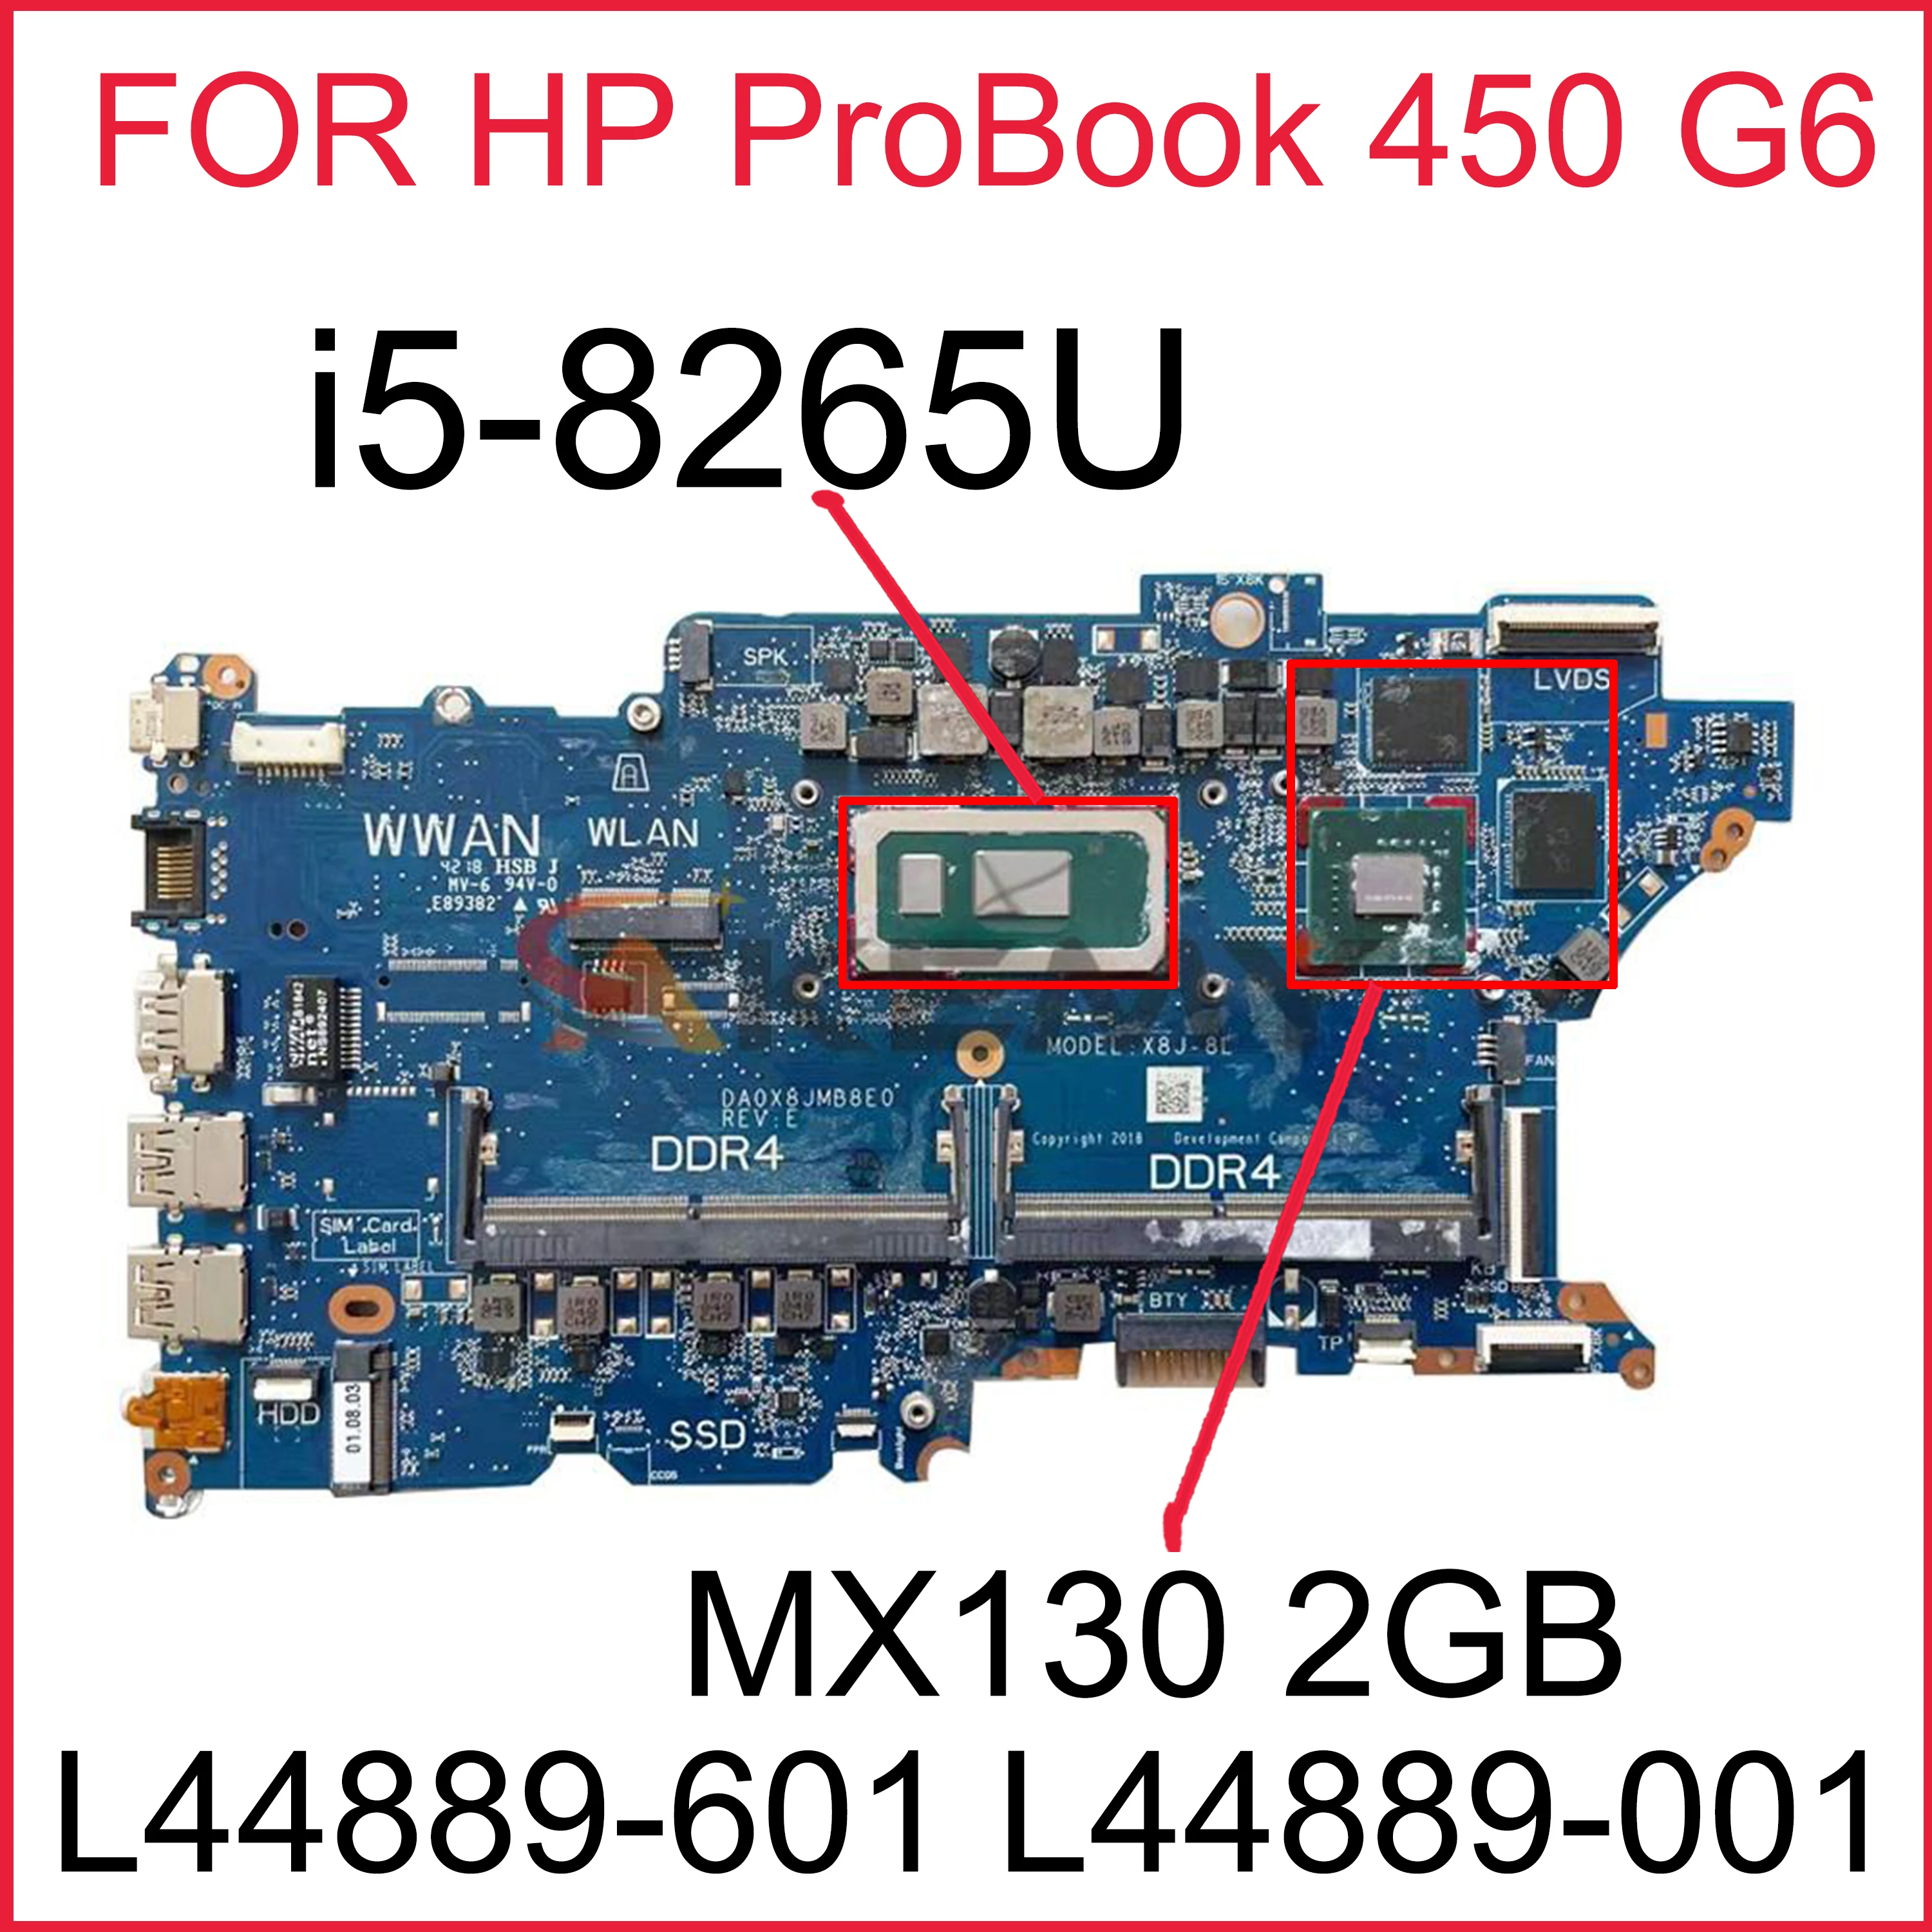 

L44889-601 For HP ProBook 430 G6 440 G6 450 G6 Laptop Motherboard DA0X8JMB8E0 X8J-8L L44889-001 with i5-8265U CPU MX130 2GB